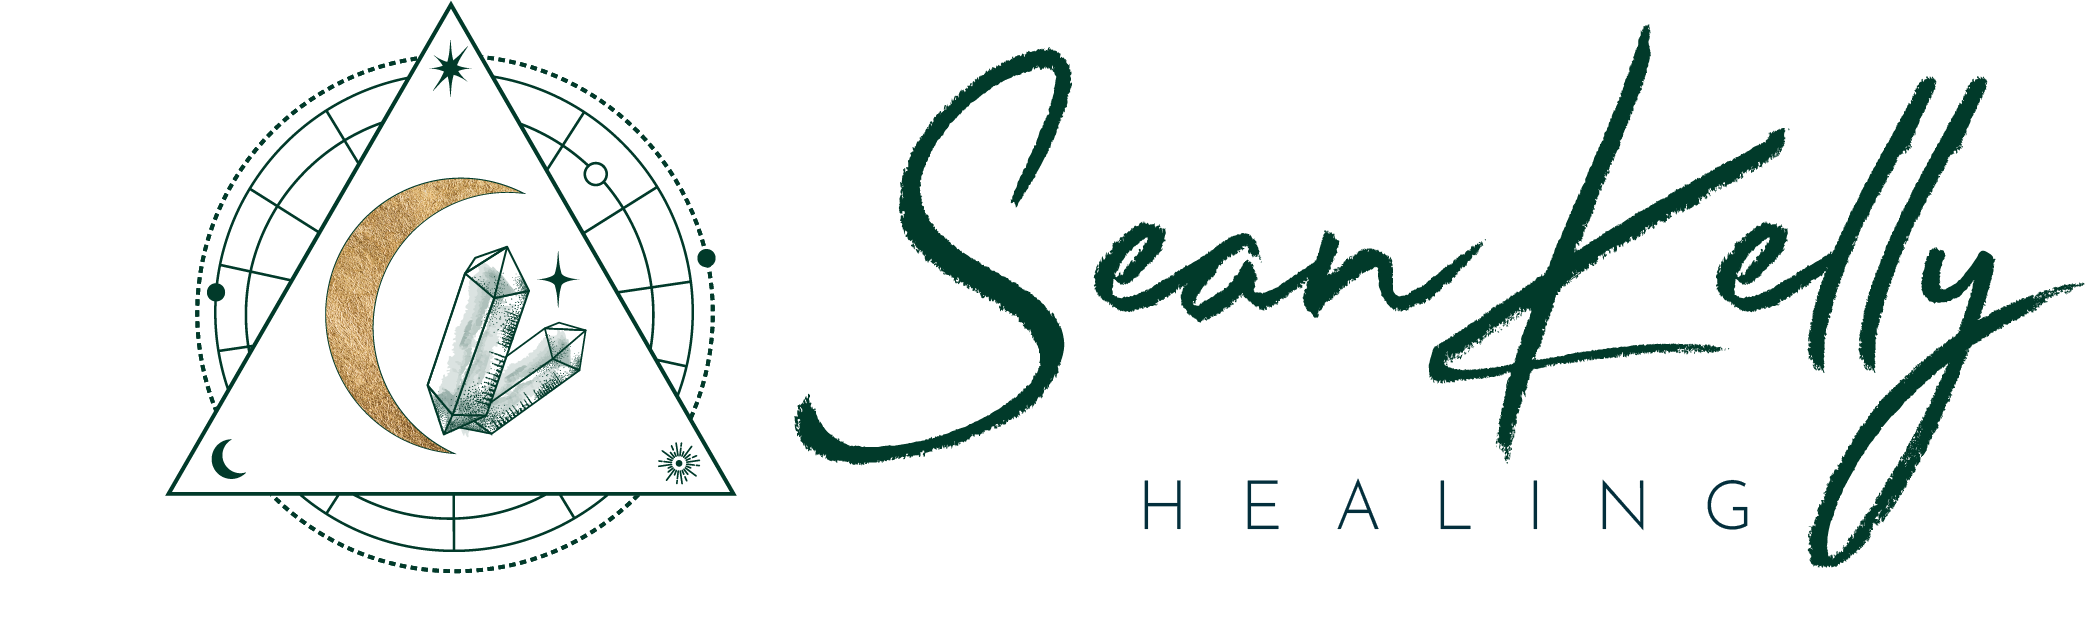 Sean Kelly Healing